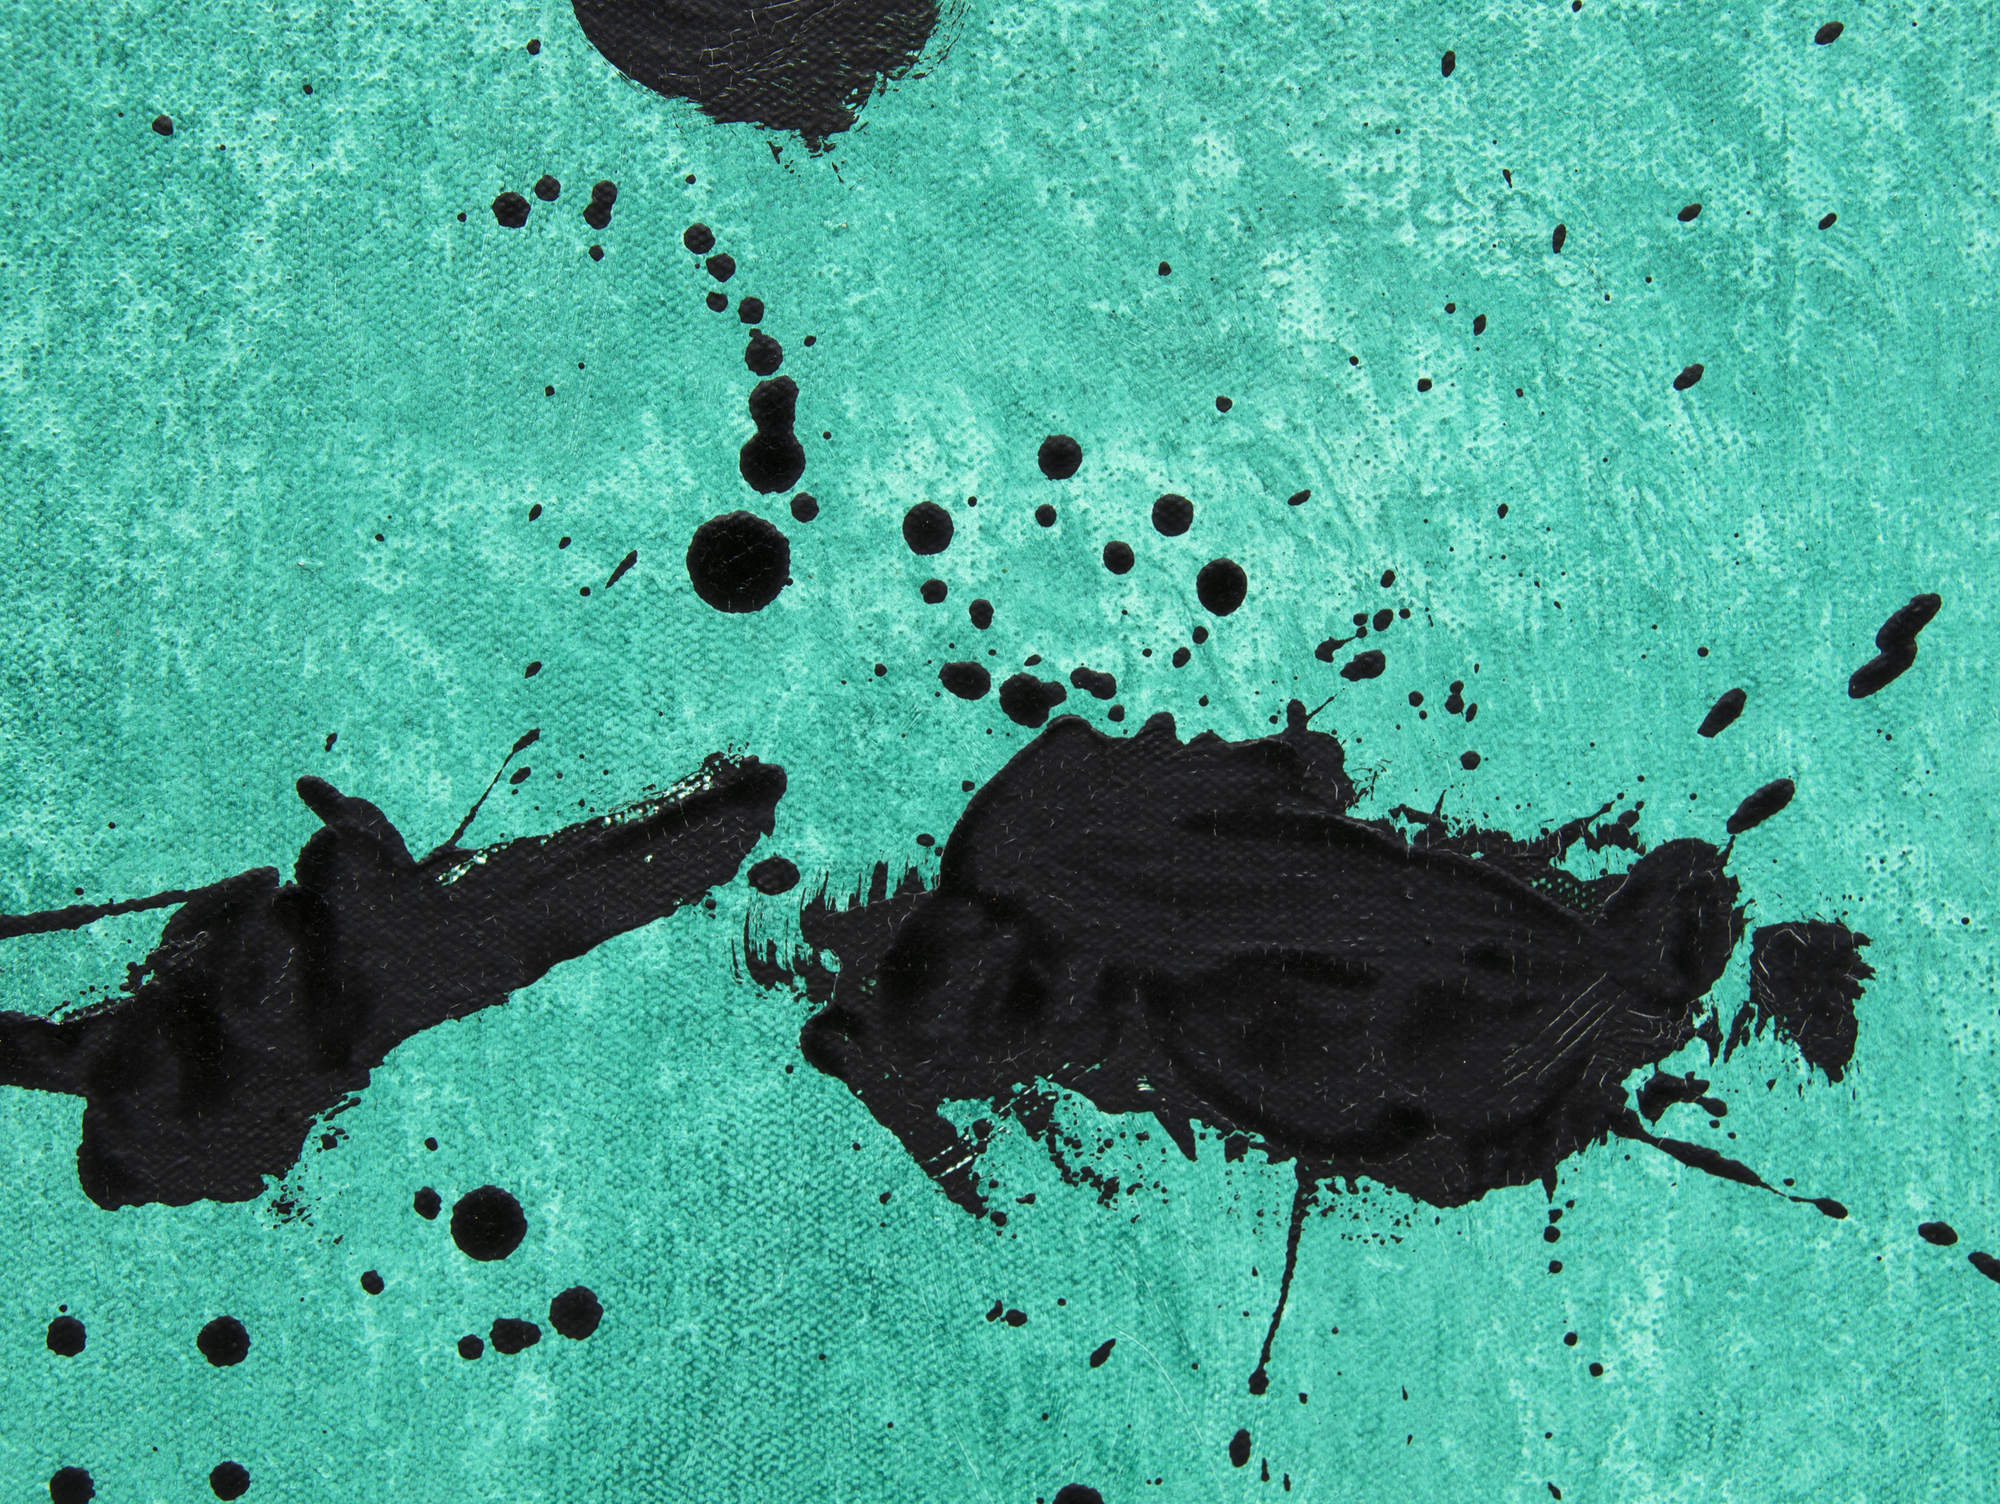 ADOLPH GOTTLIEB - Azimuth - oil on canvas - 95 3/4 x 144 1/4 in.